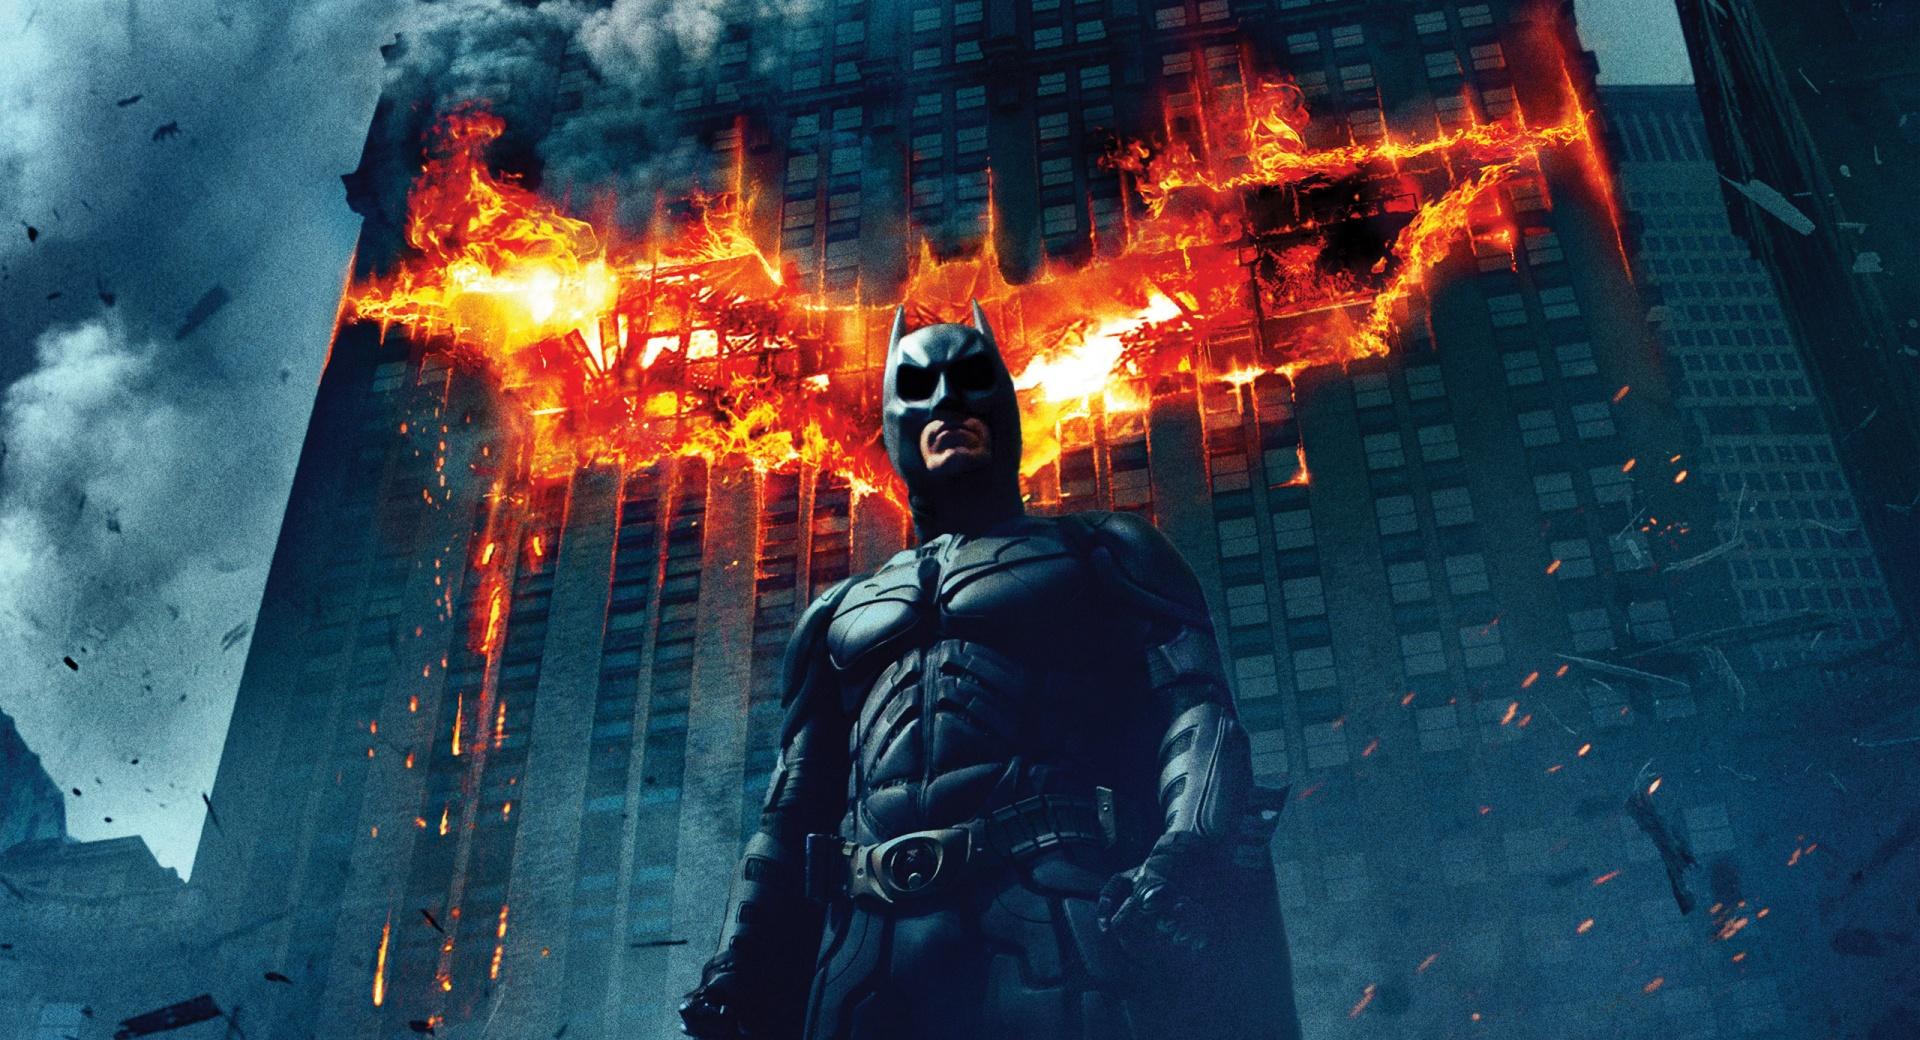 Batman The Dark Knight at 1280 x 960 size wallpapers HD quality